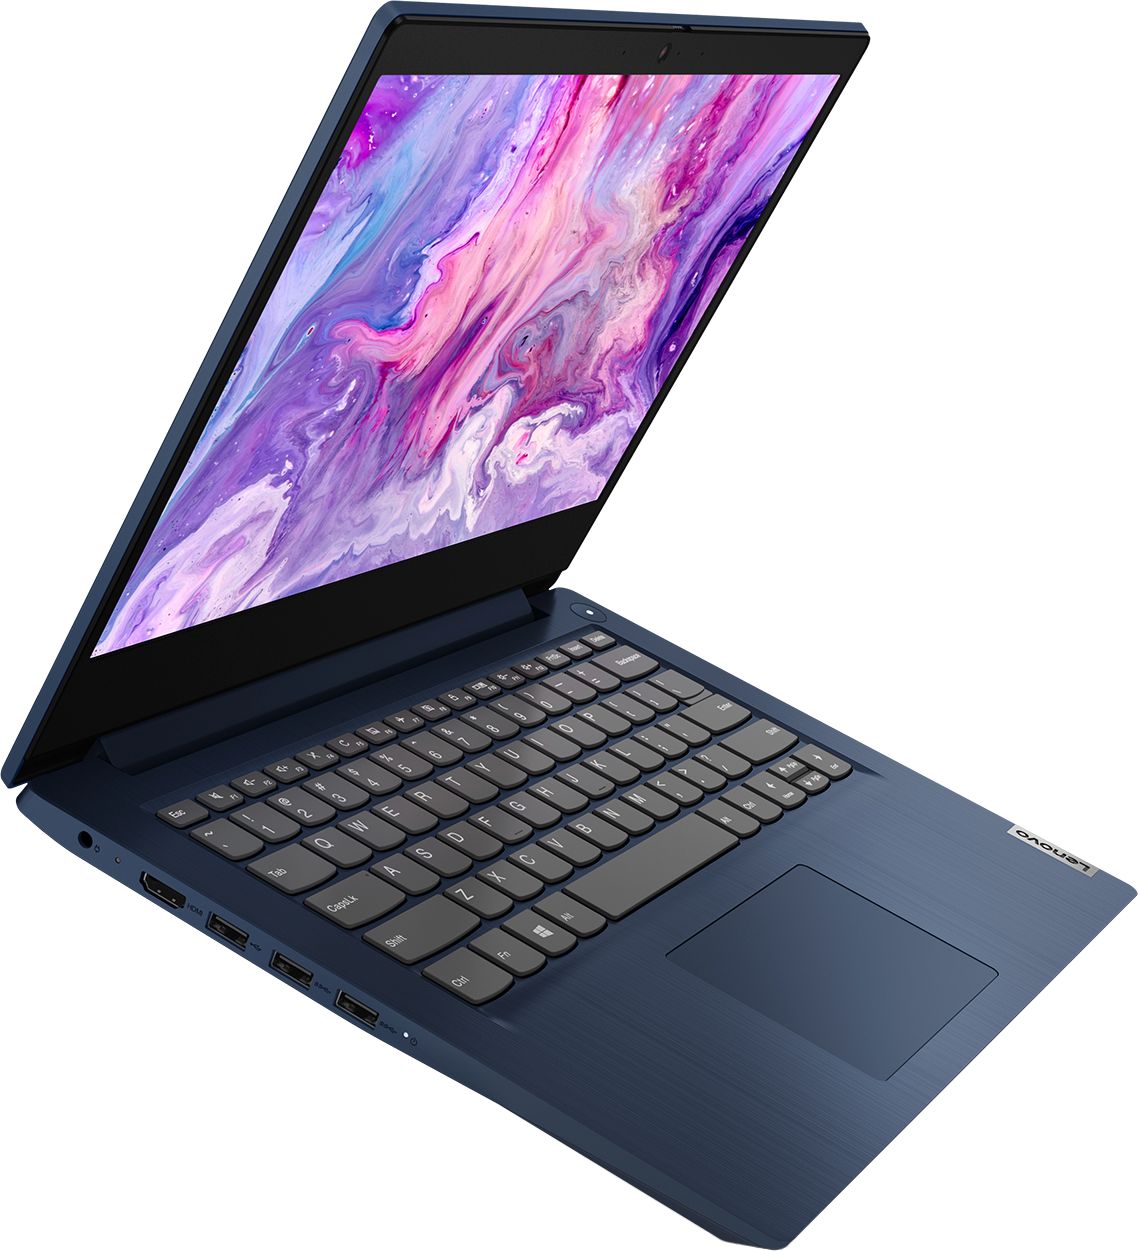 Lenovo Ideapad 3 14 Laptop Amd Ryzen 3 3250u 8gb Memory 1tb Hdd Abyss Blue 81w0009dus Best Buy